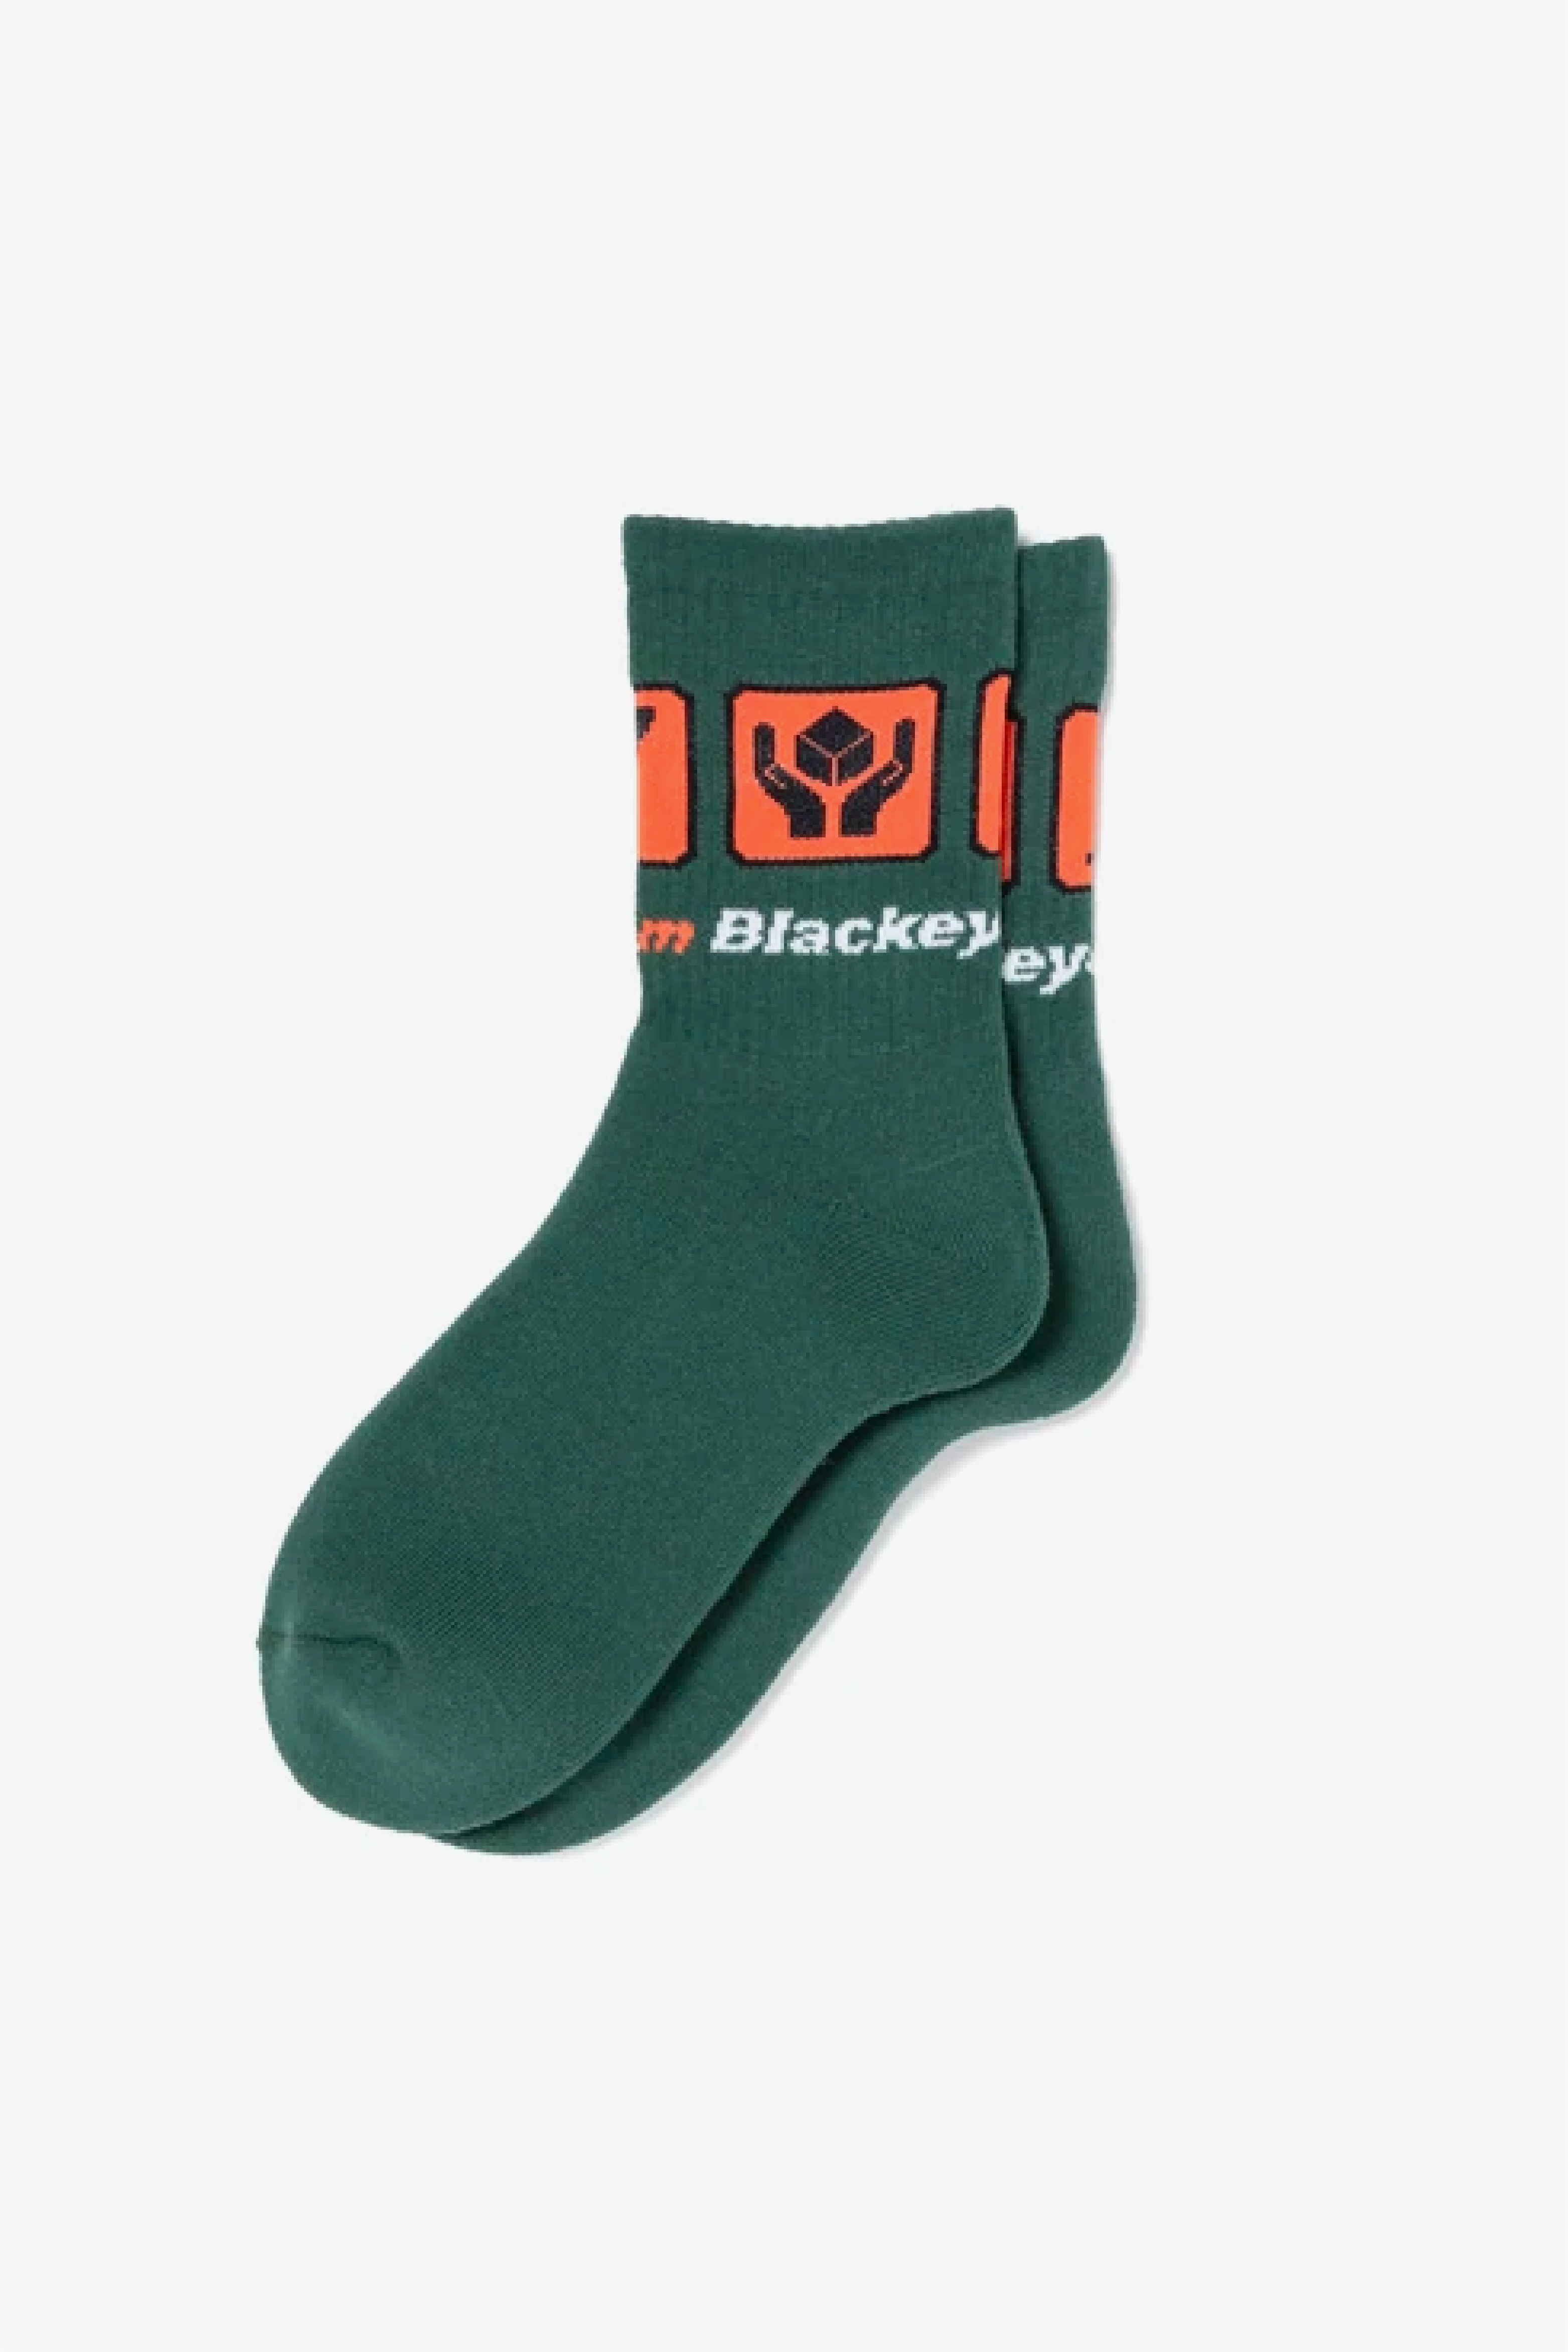 Selectshop FRAME - BLACKEYEPATCH Dotcom Socks All-Accessories Dubai